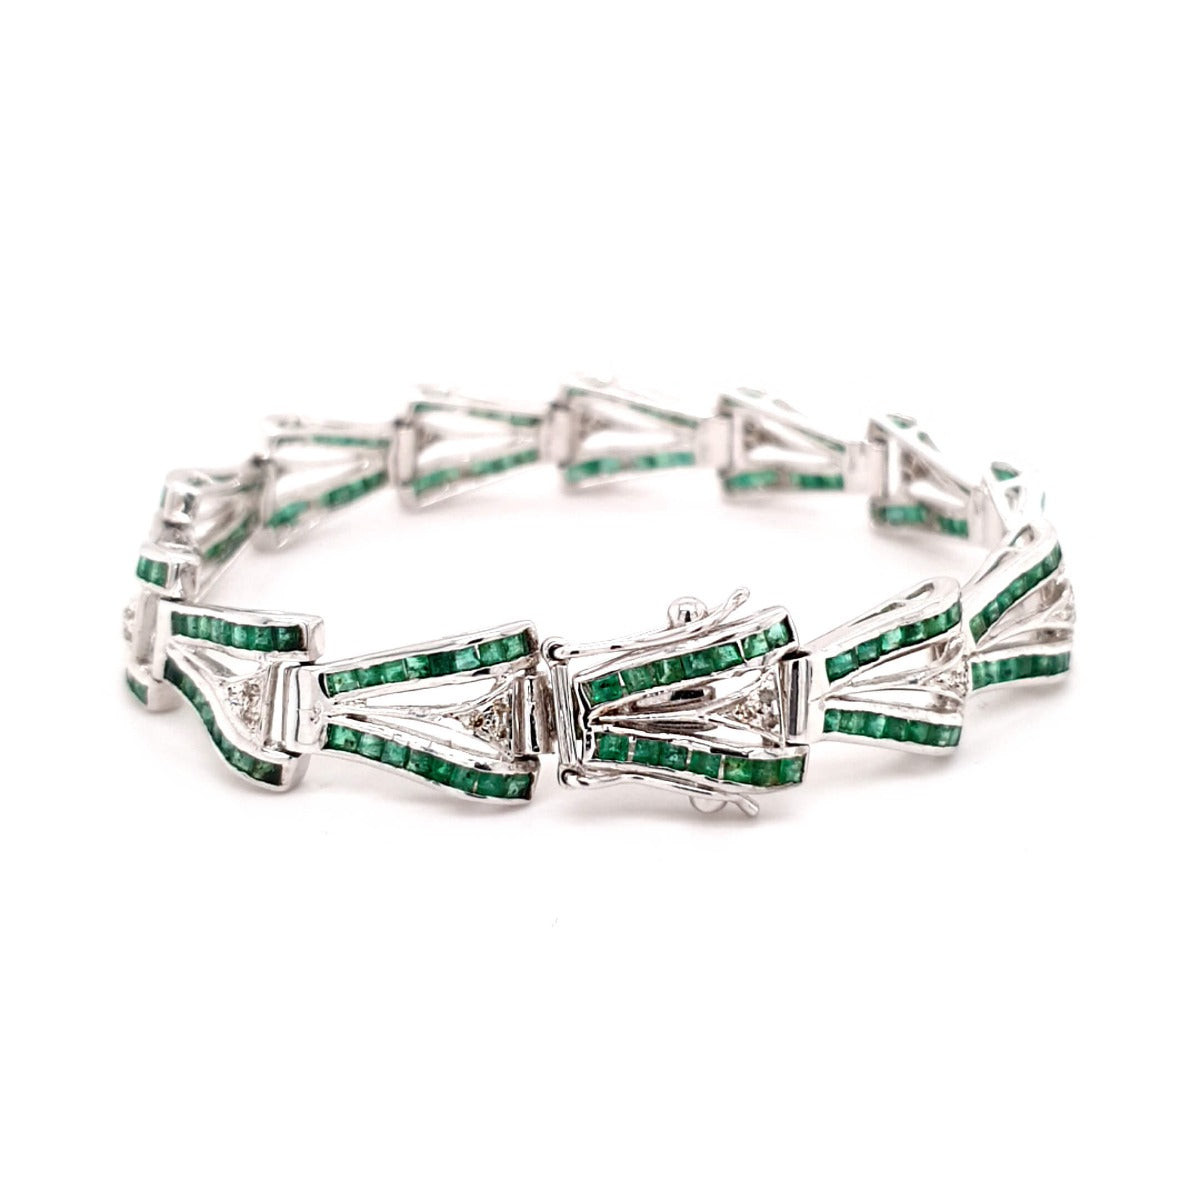 Charismatic diamond and emerald bracelet